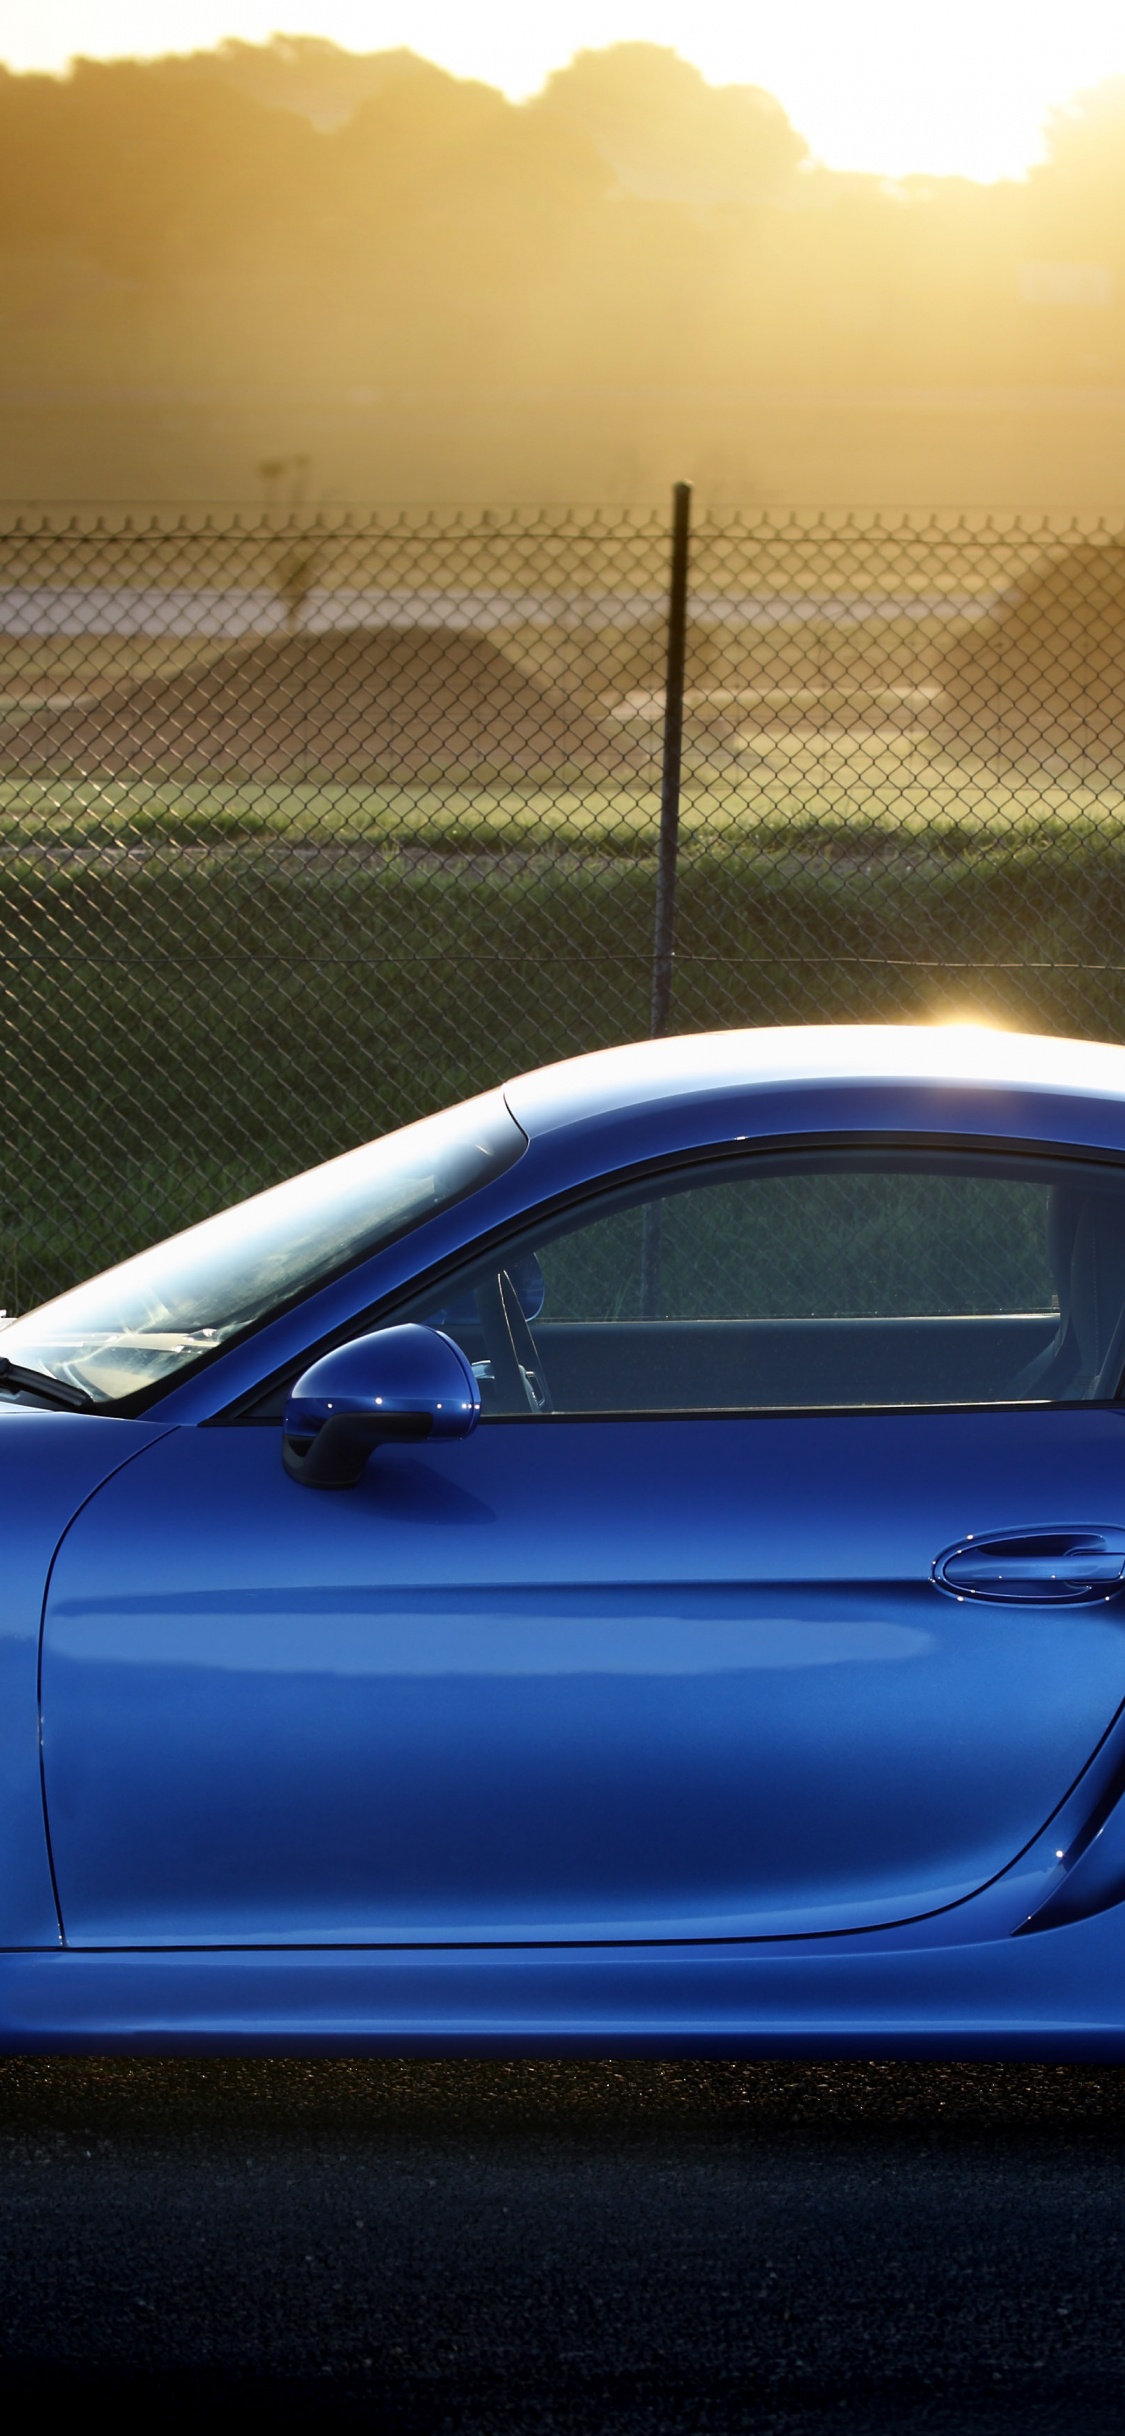 Blue Porsche 911 Parked Near Gray Metal Fence During Daytime. Wallpaper in 1125x2436 Resolution